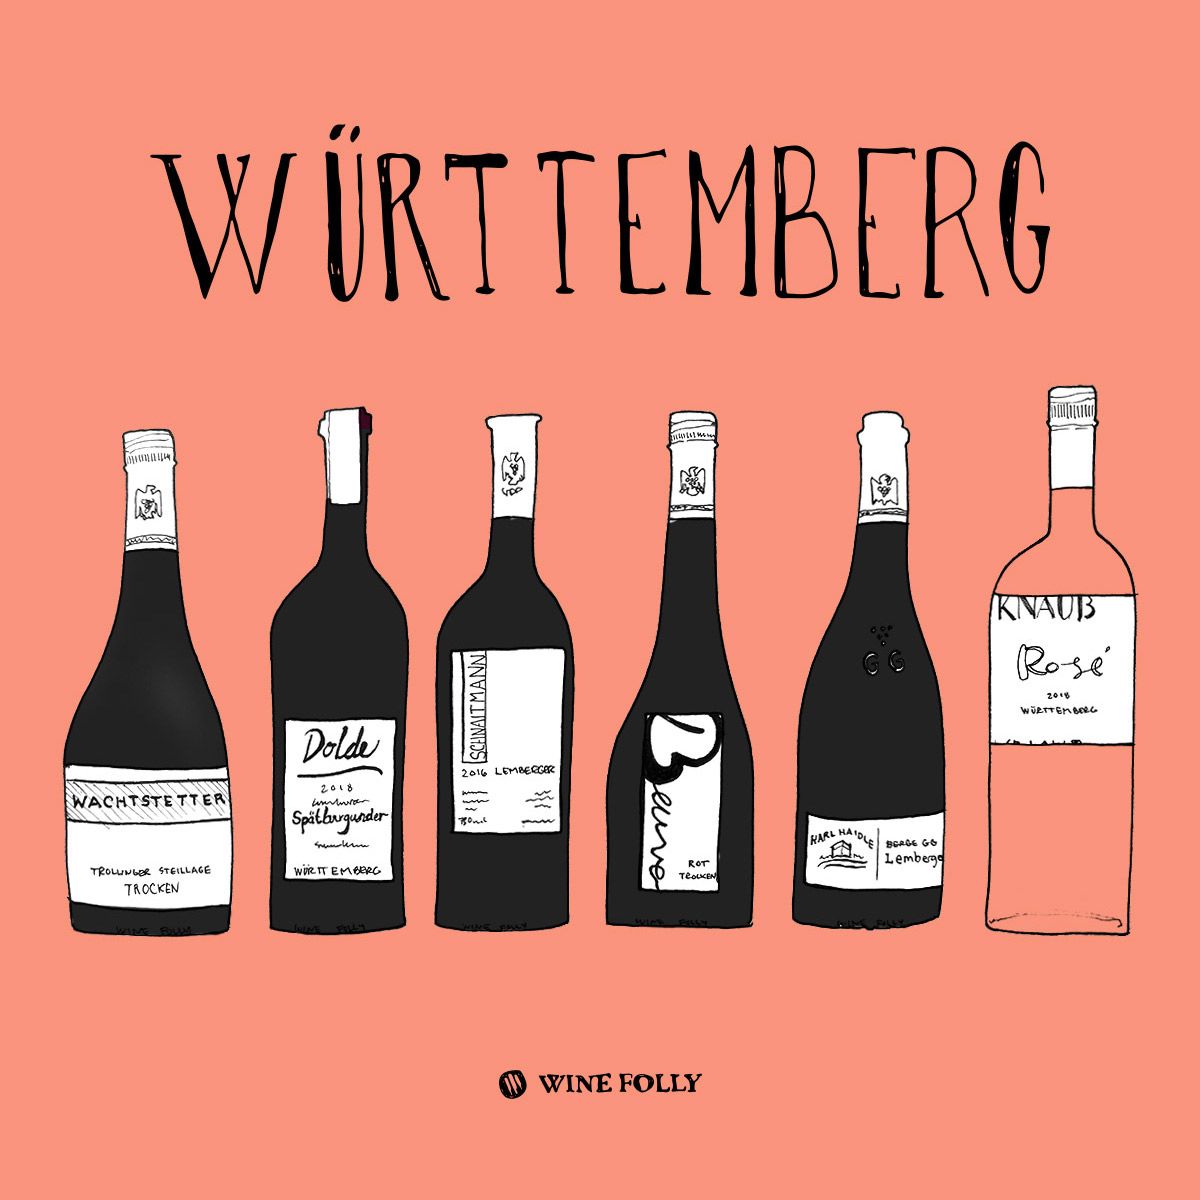 Württemberg nemška rdeča vina, da poskusite